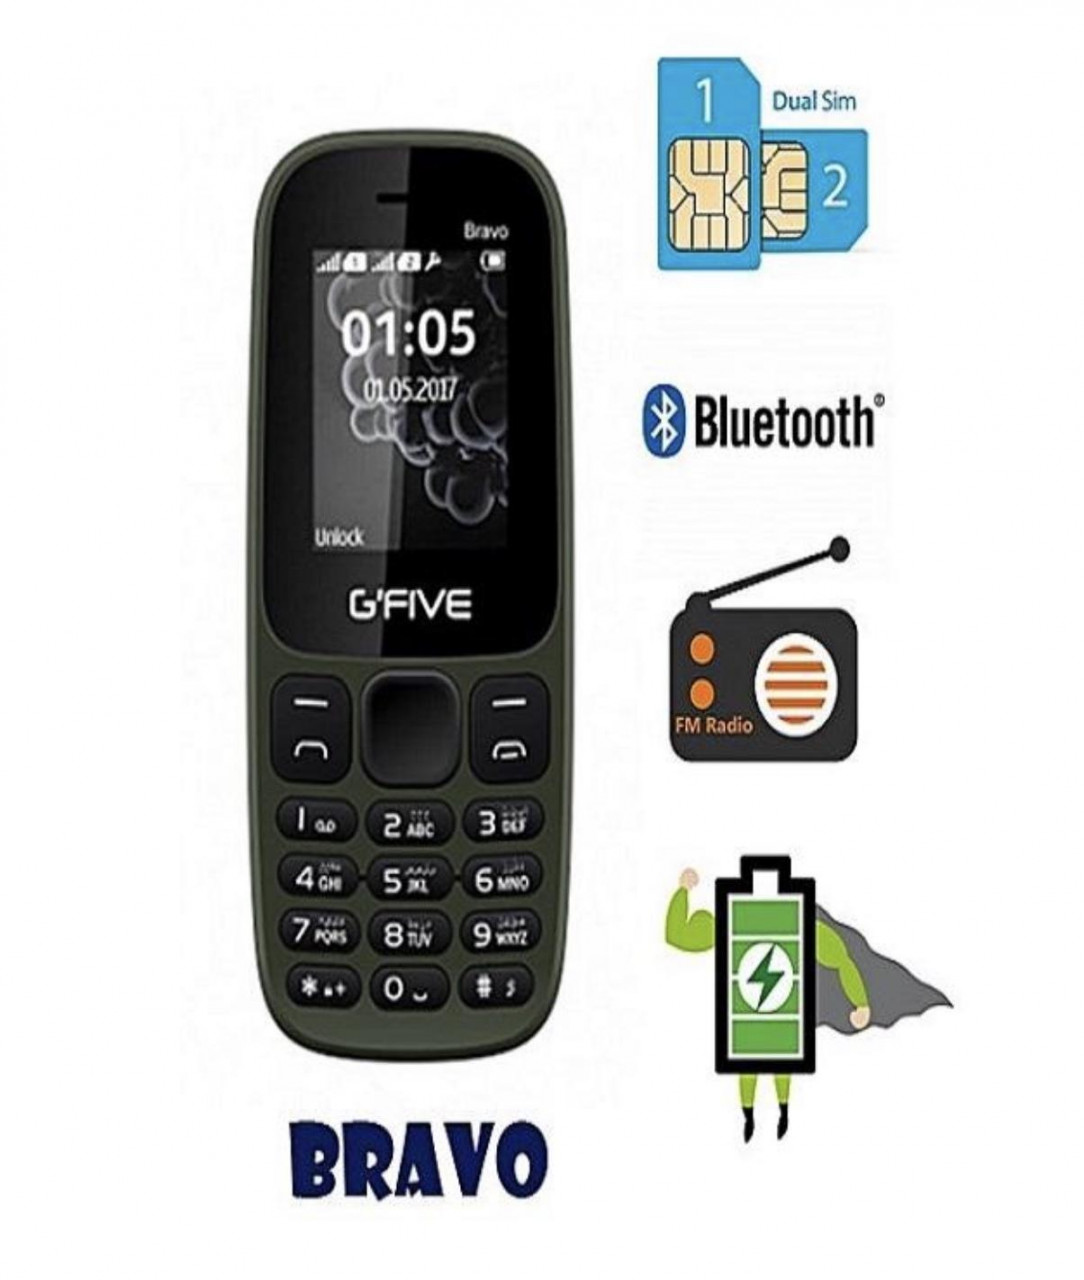 Gfive Bravo Dual Sim Mobile Phone Price In Pakistan Homeshoppin